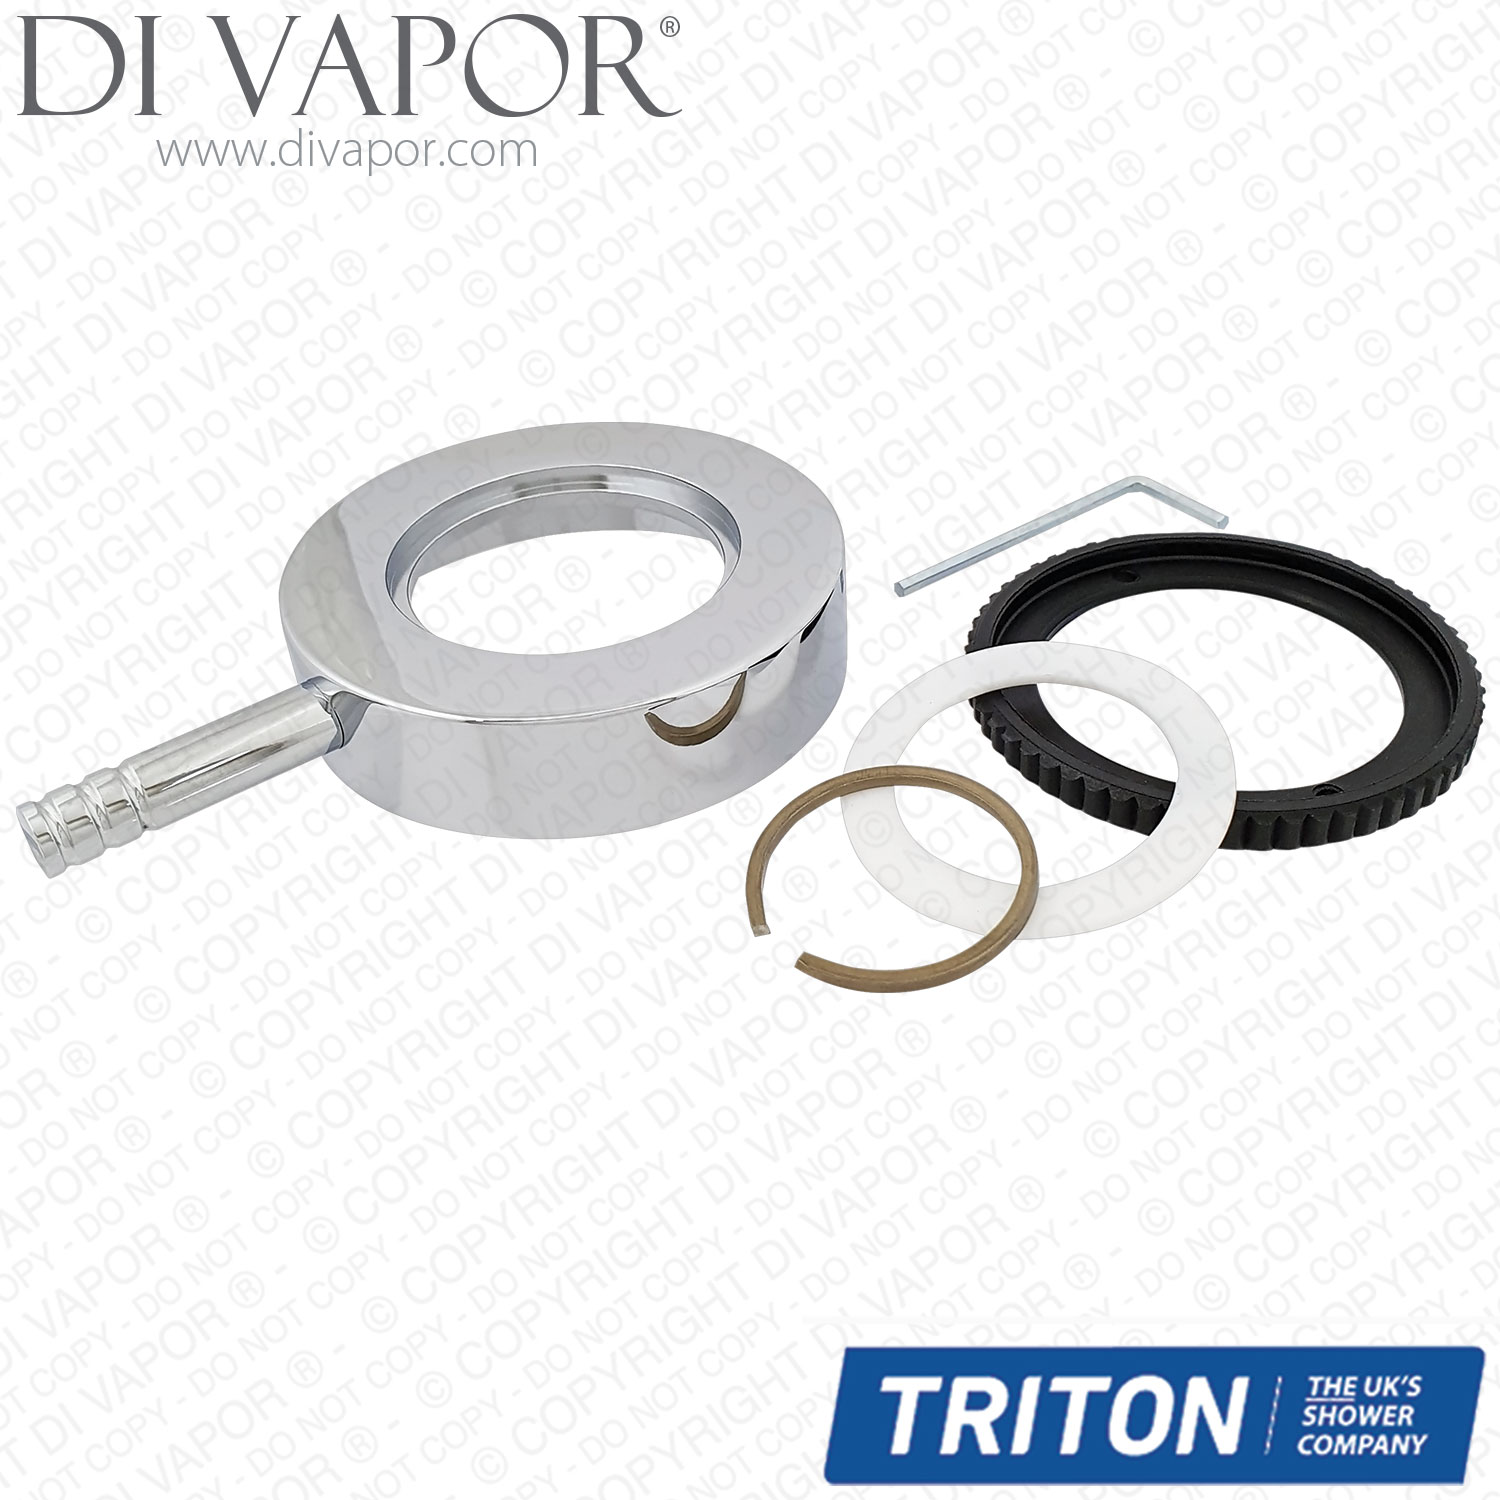 Triton 83307850 Elina/Thames Flow Control Assembly - Chrome